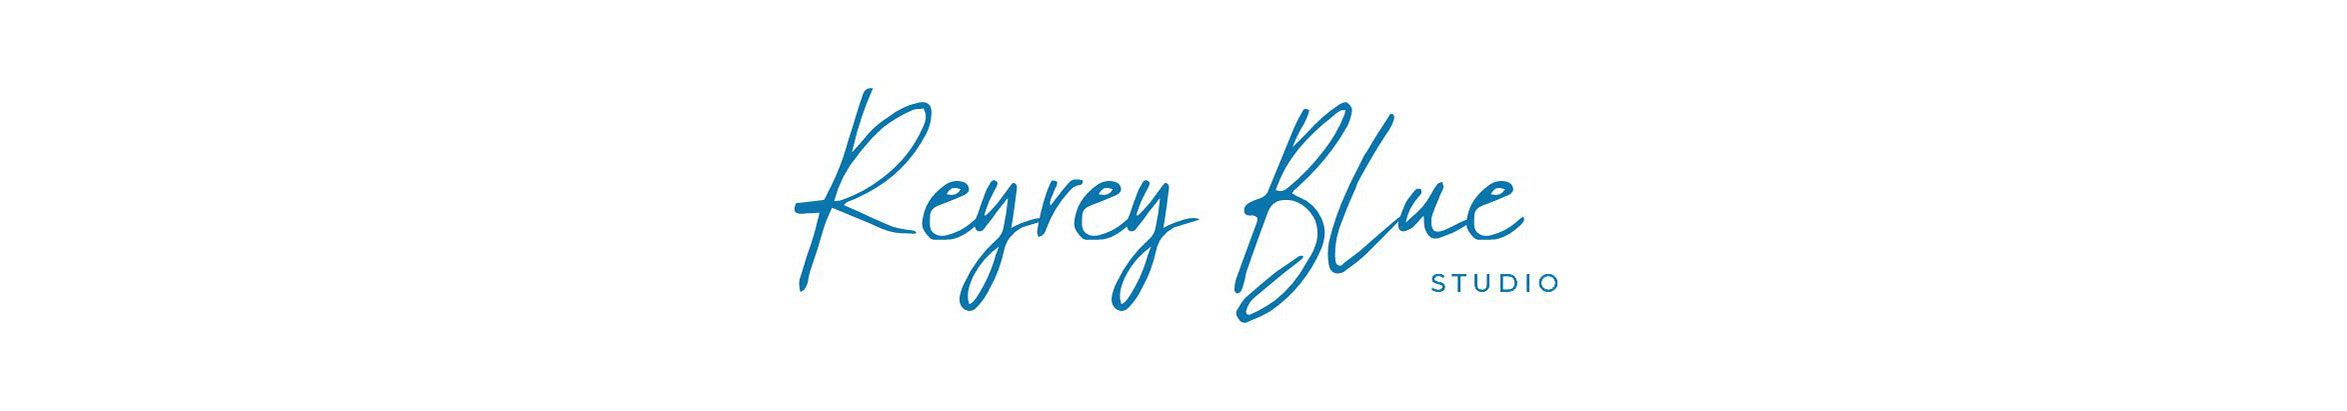 ReyReyBlue Studio's profile banner